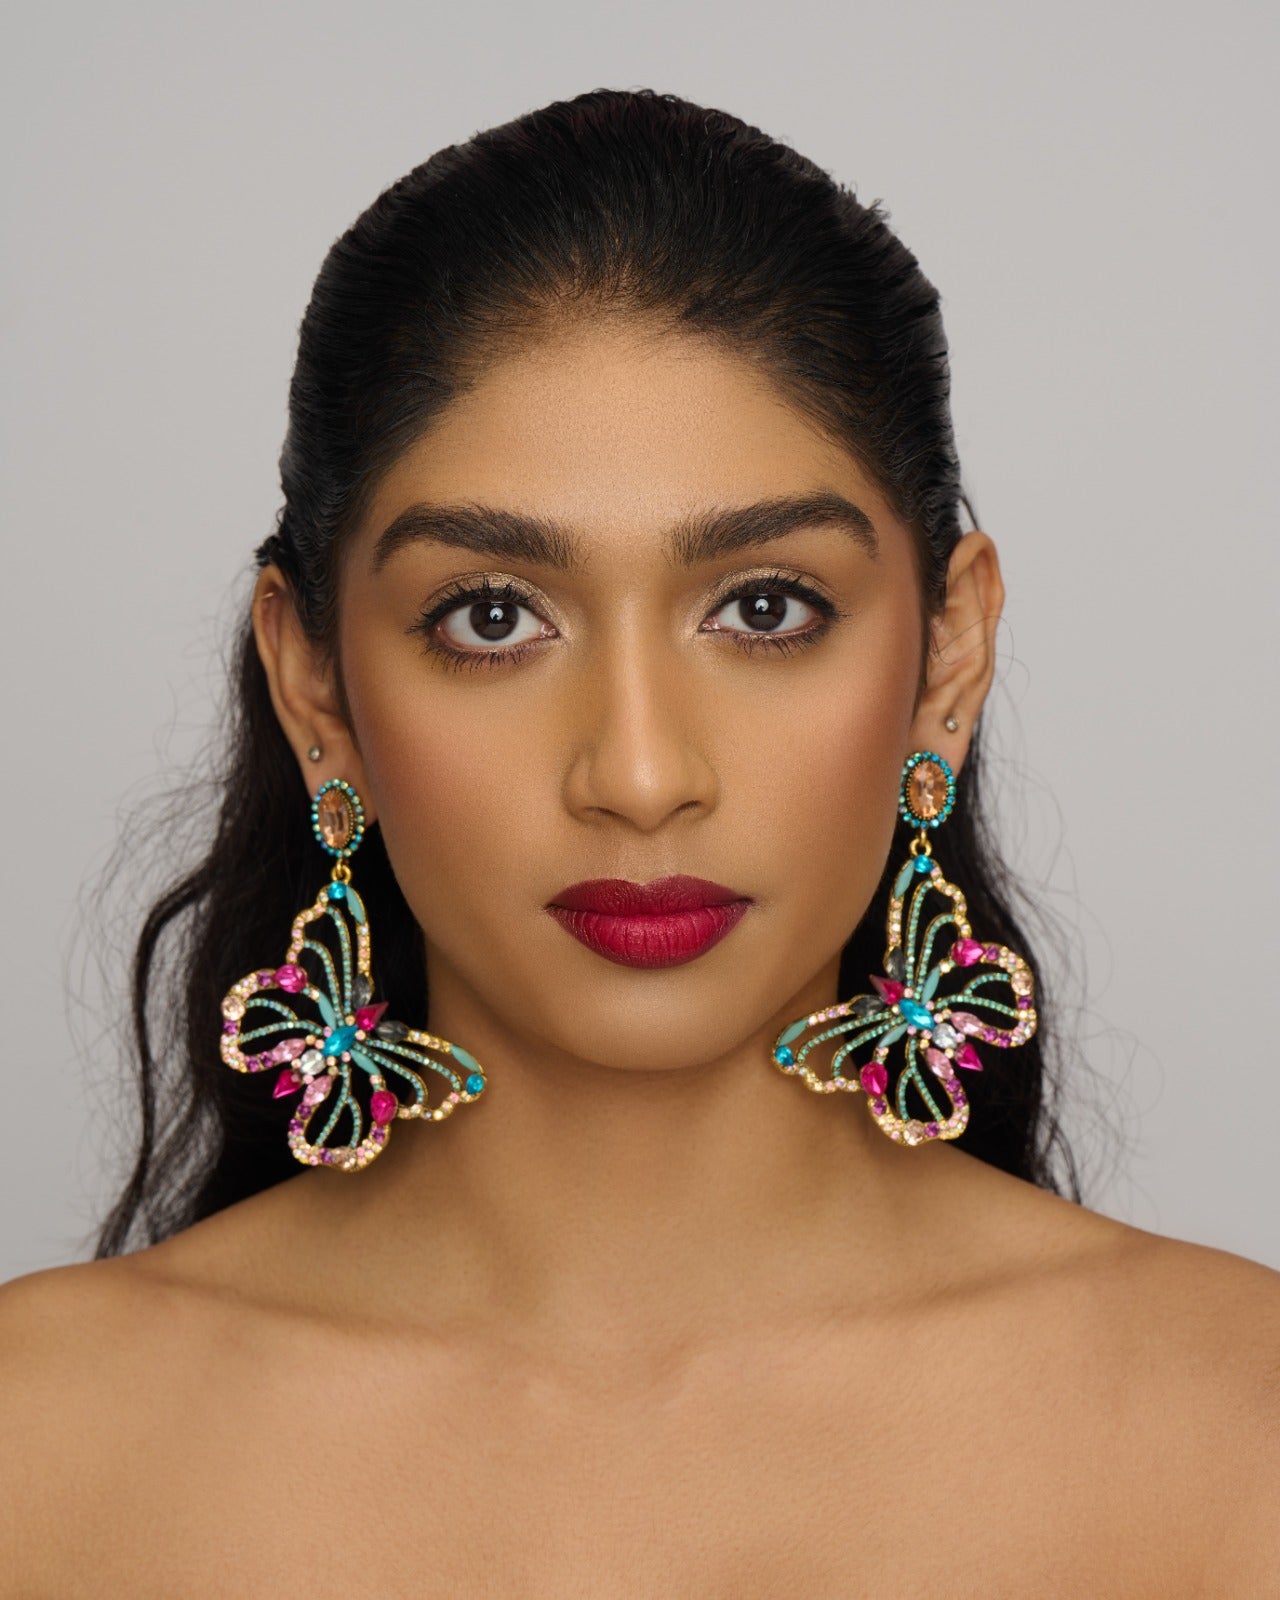 Gorgeous Luxury Multicolour Rhinestones Crystal Butterfly Statement Earrings